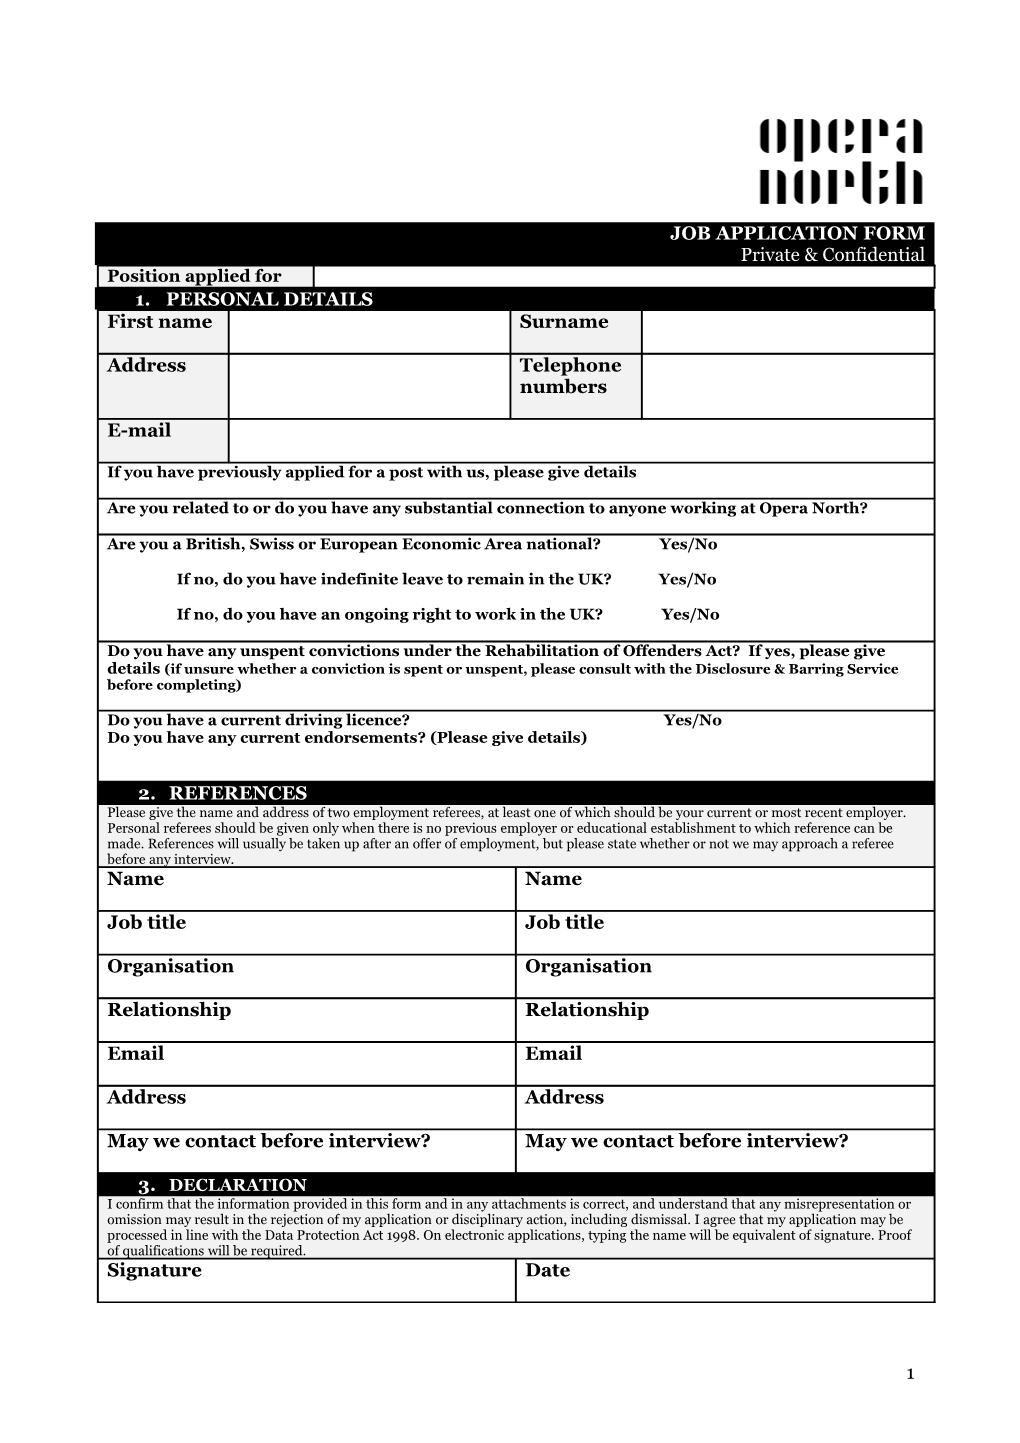 Opera North Application Form